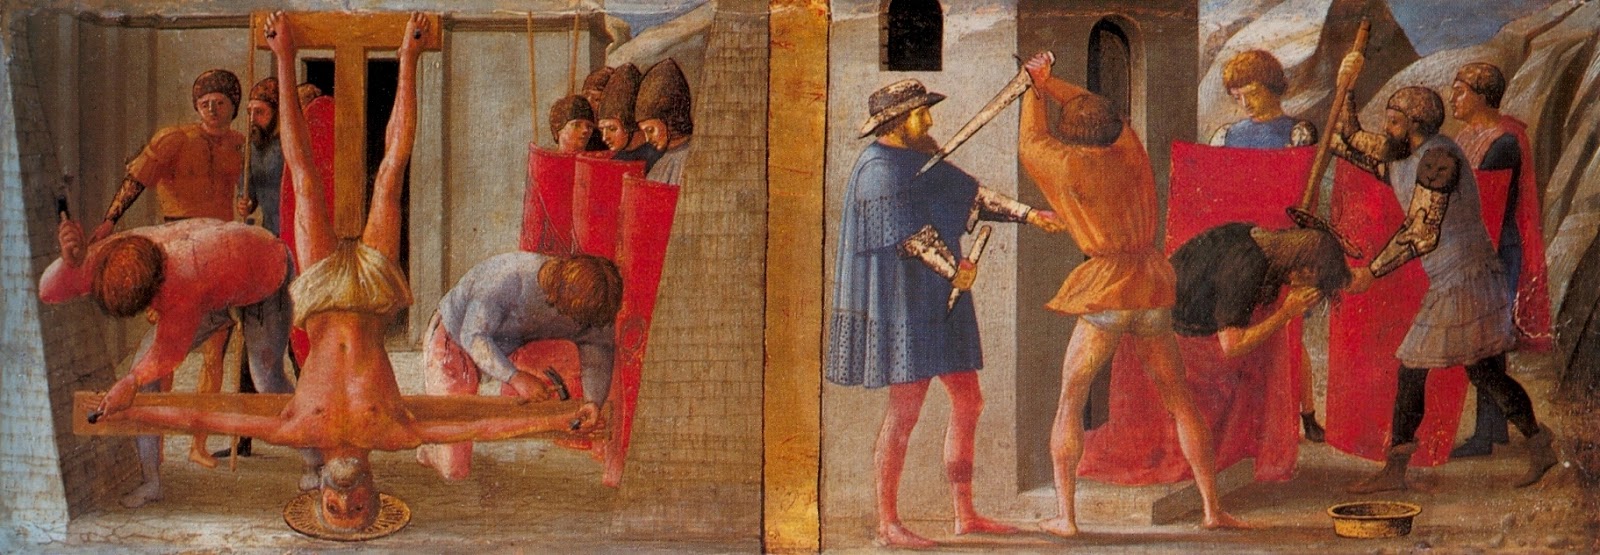 Masaccio-1401-1428 (17).jpg